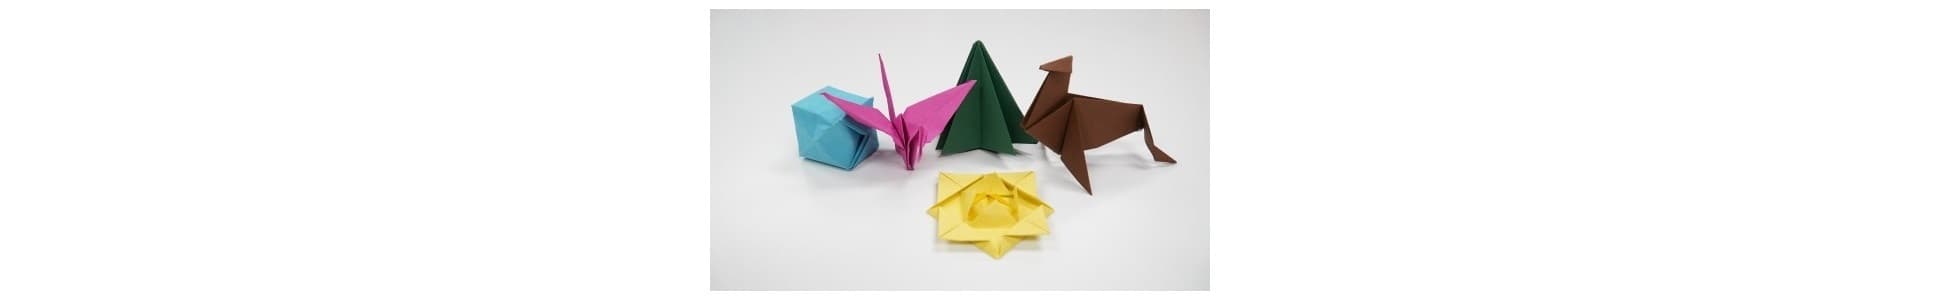 Origami Header